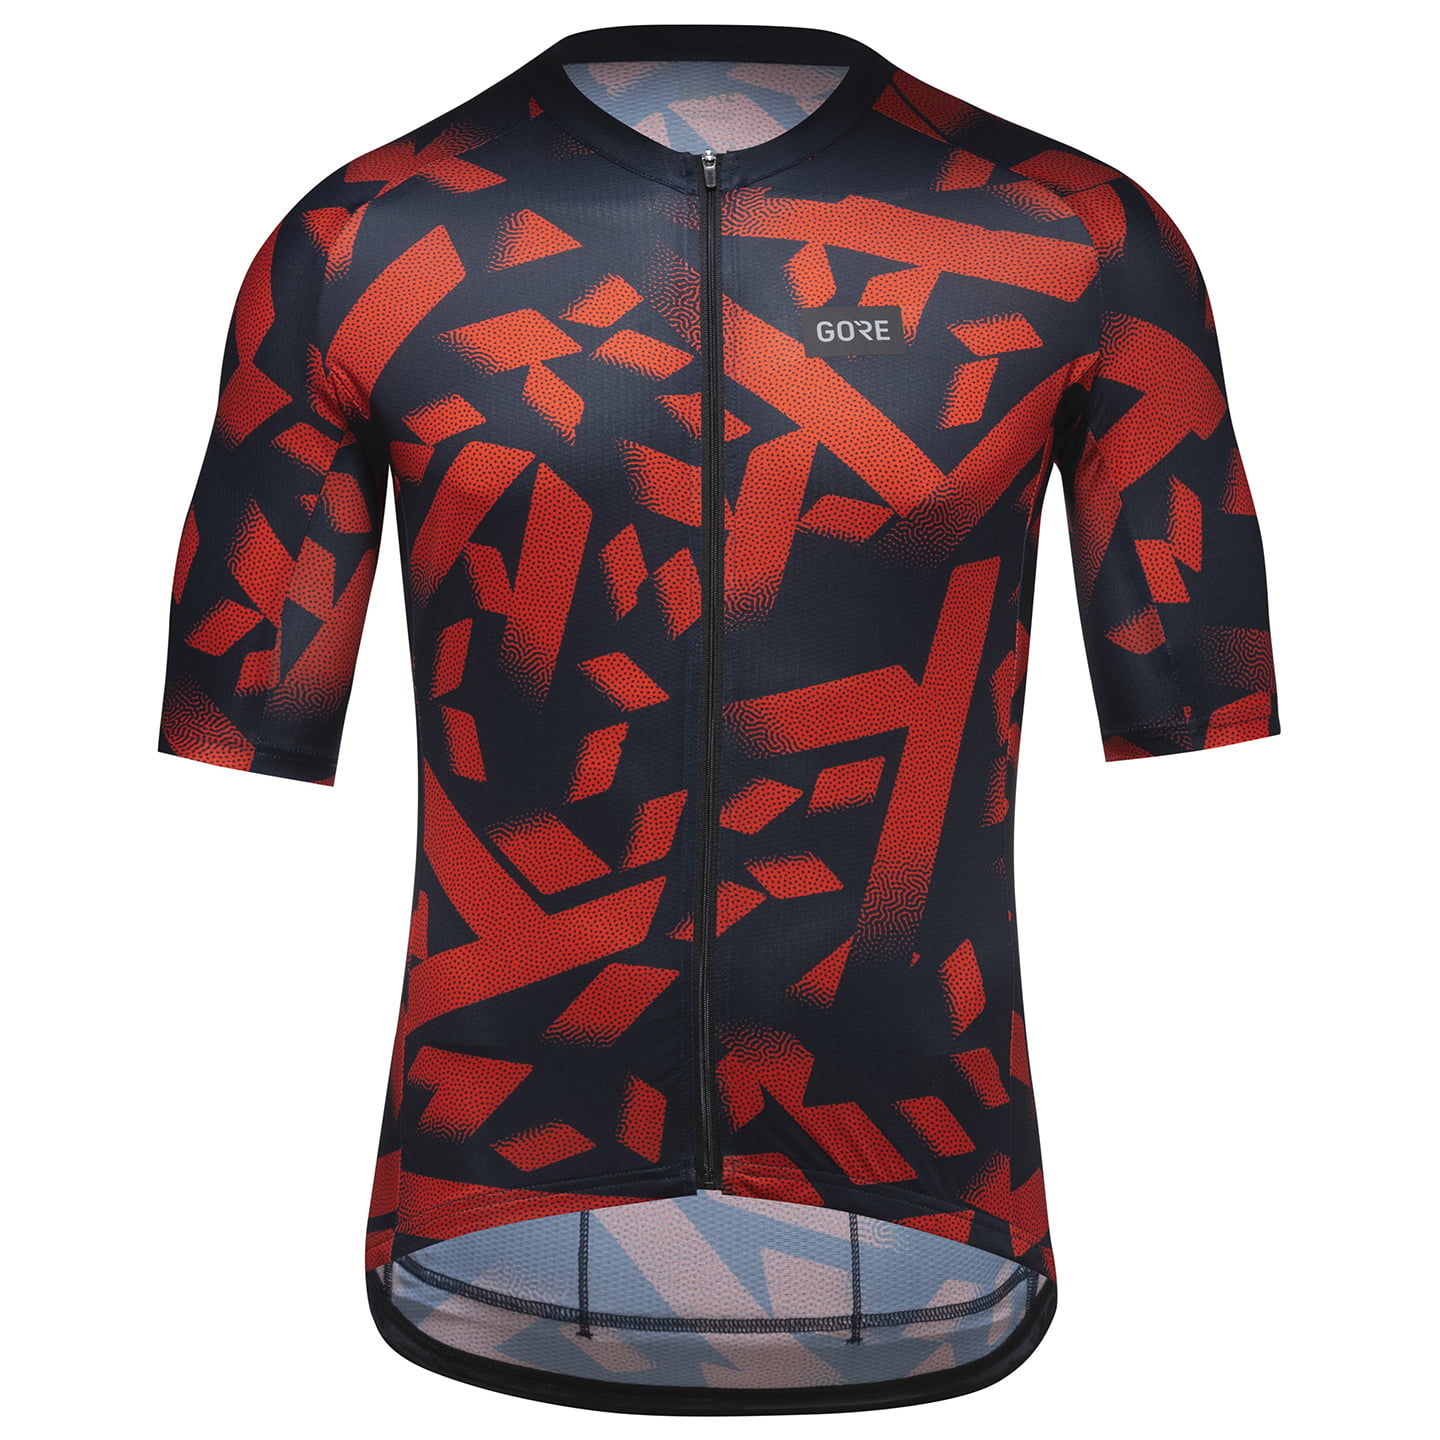 Spirit Signal Camo Short Sleeve Jersey Short Sleeve Jersey, for men, size S, Cycling jersey, Cycling clothing